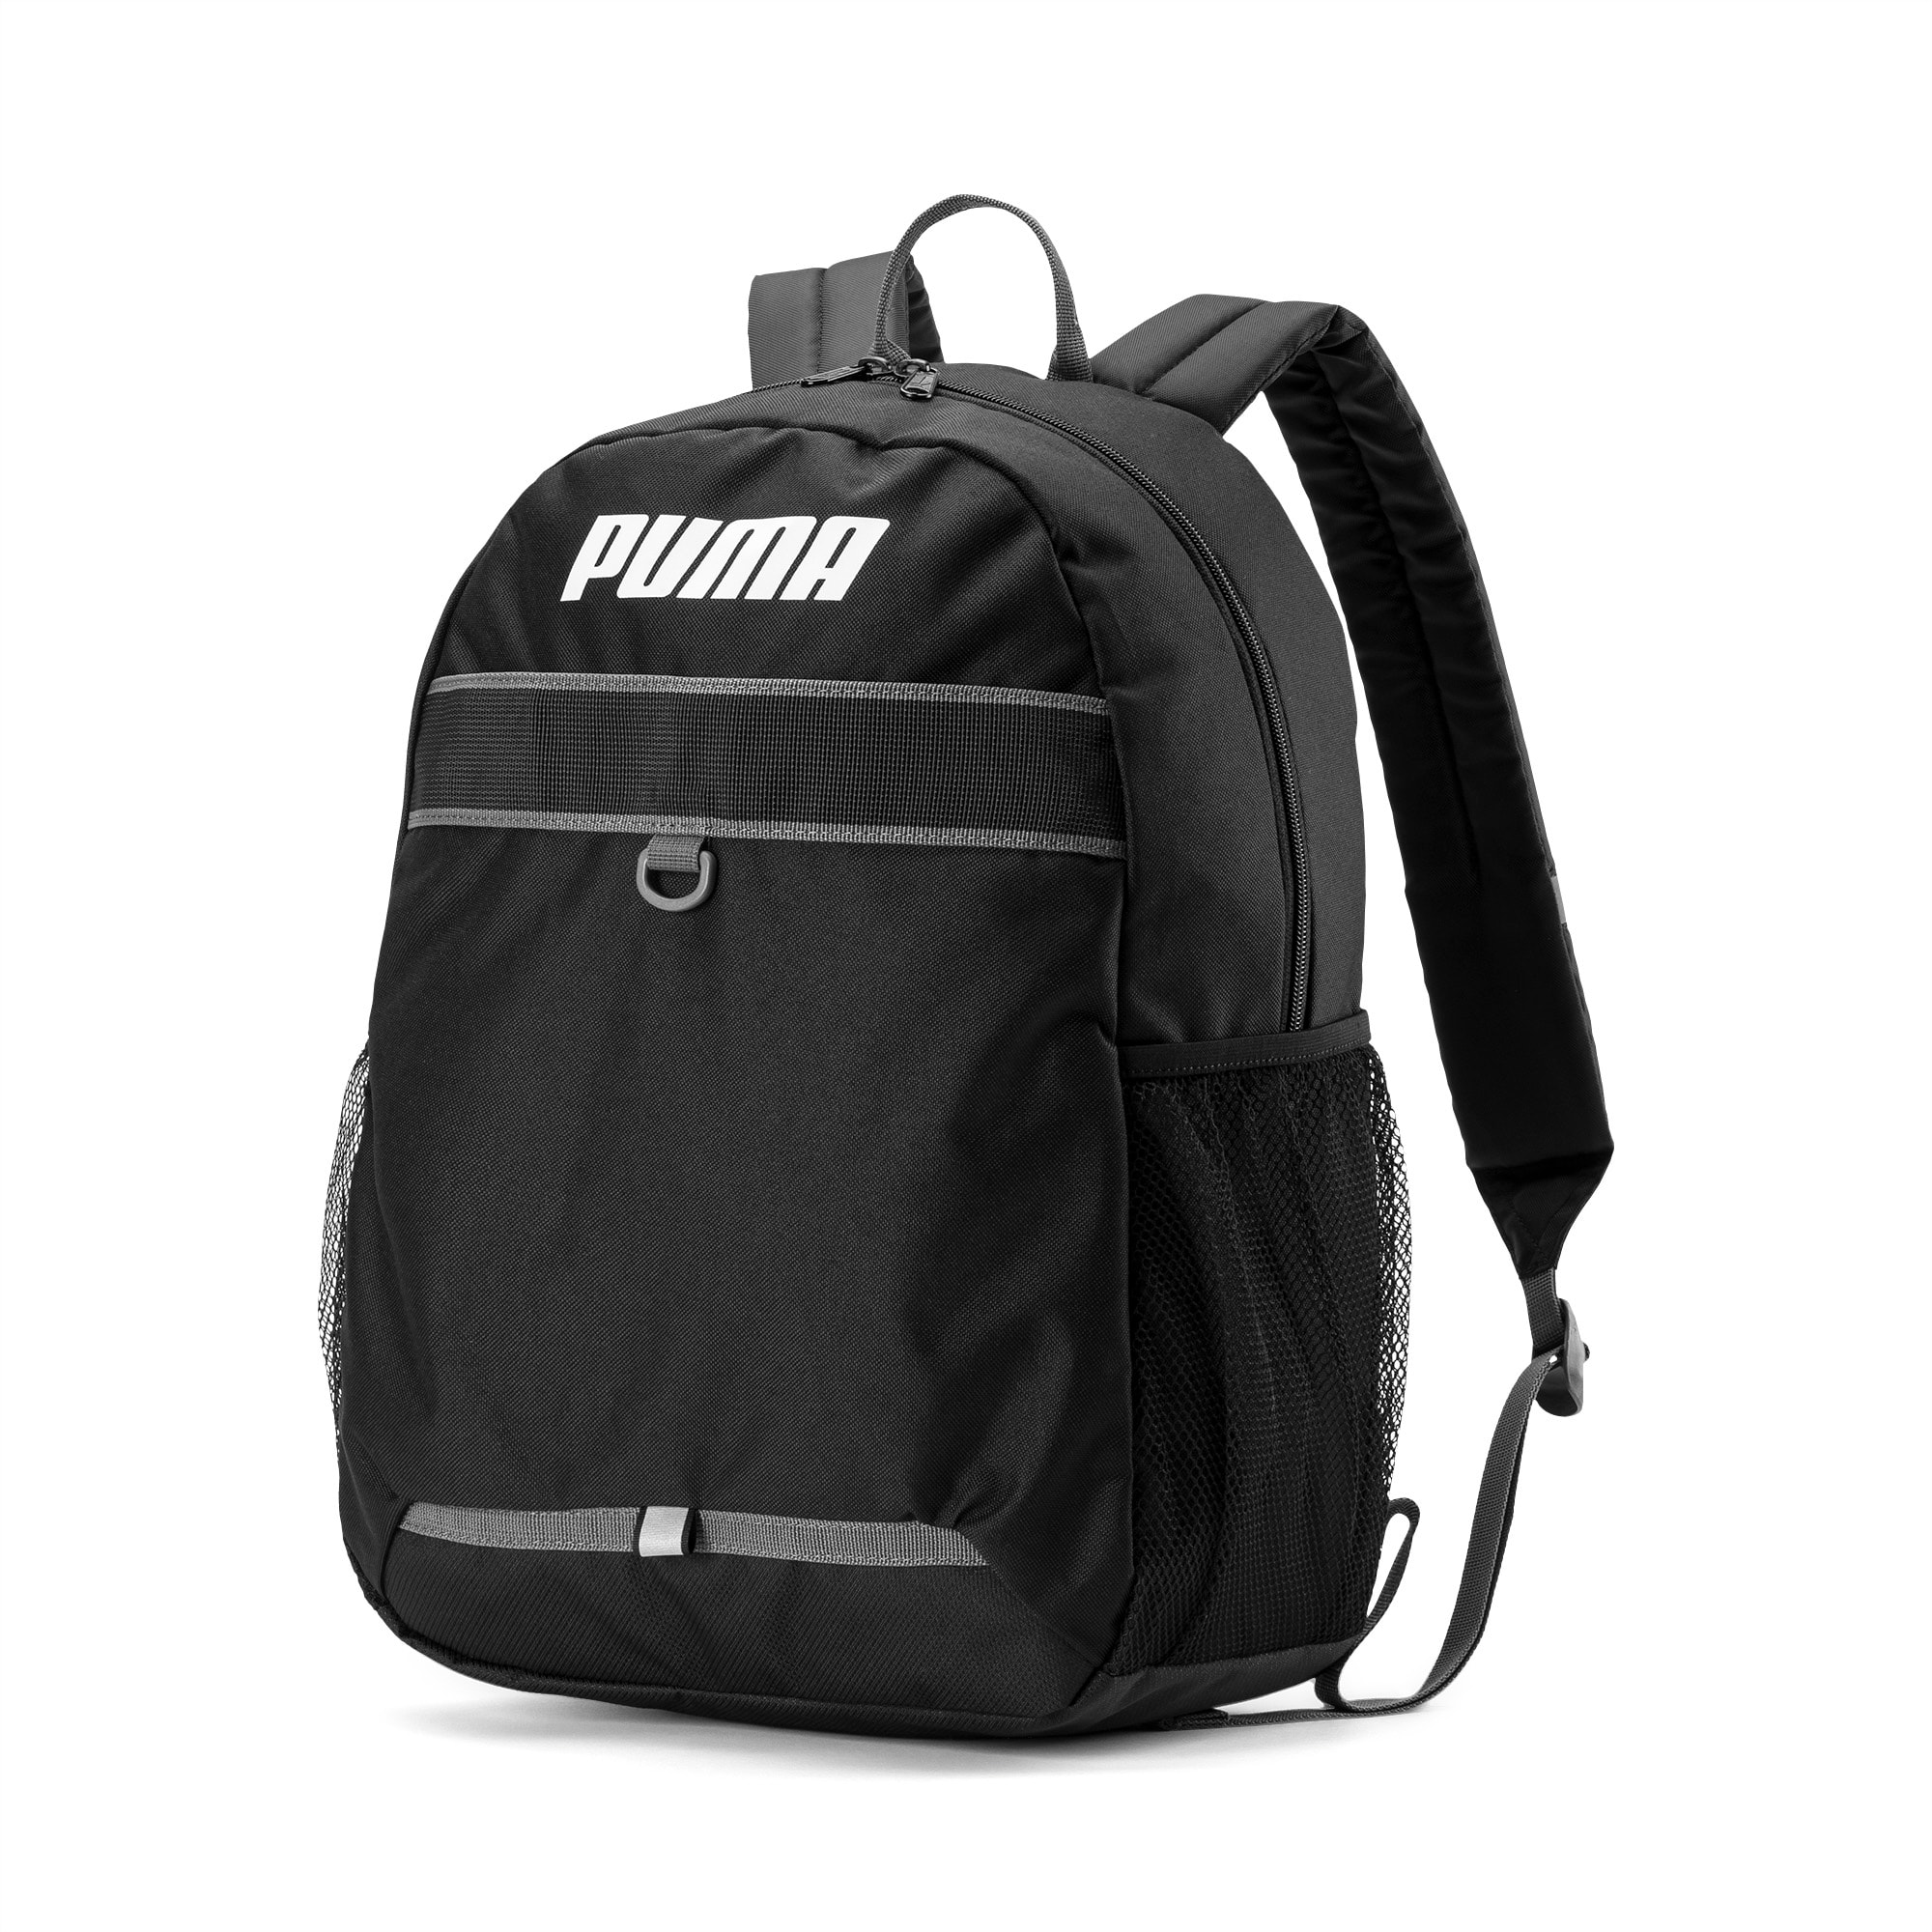 Plus PUMA | PUMA Backpack